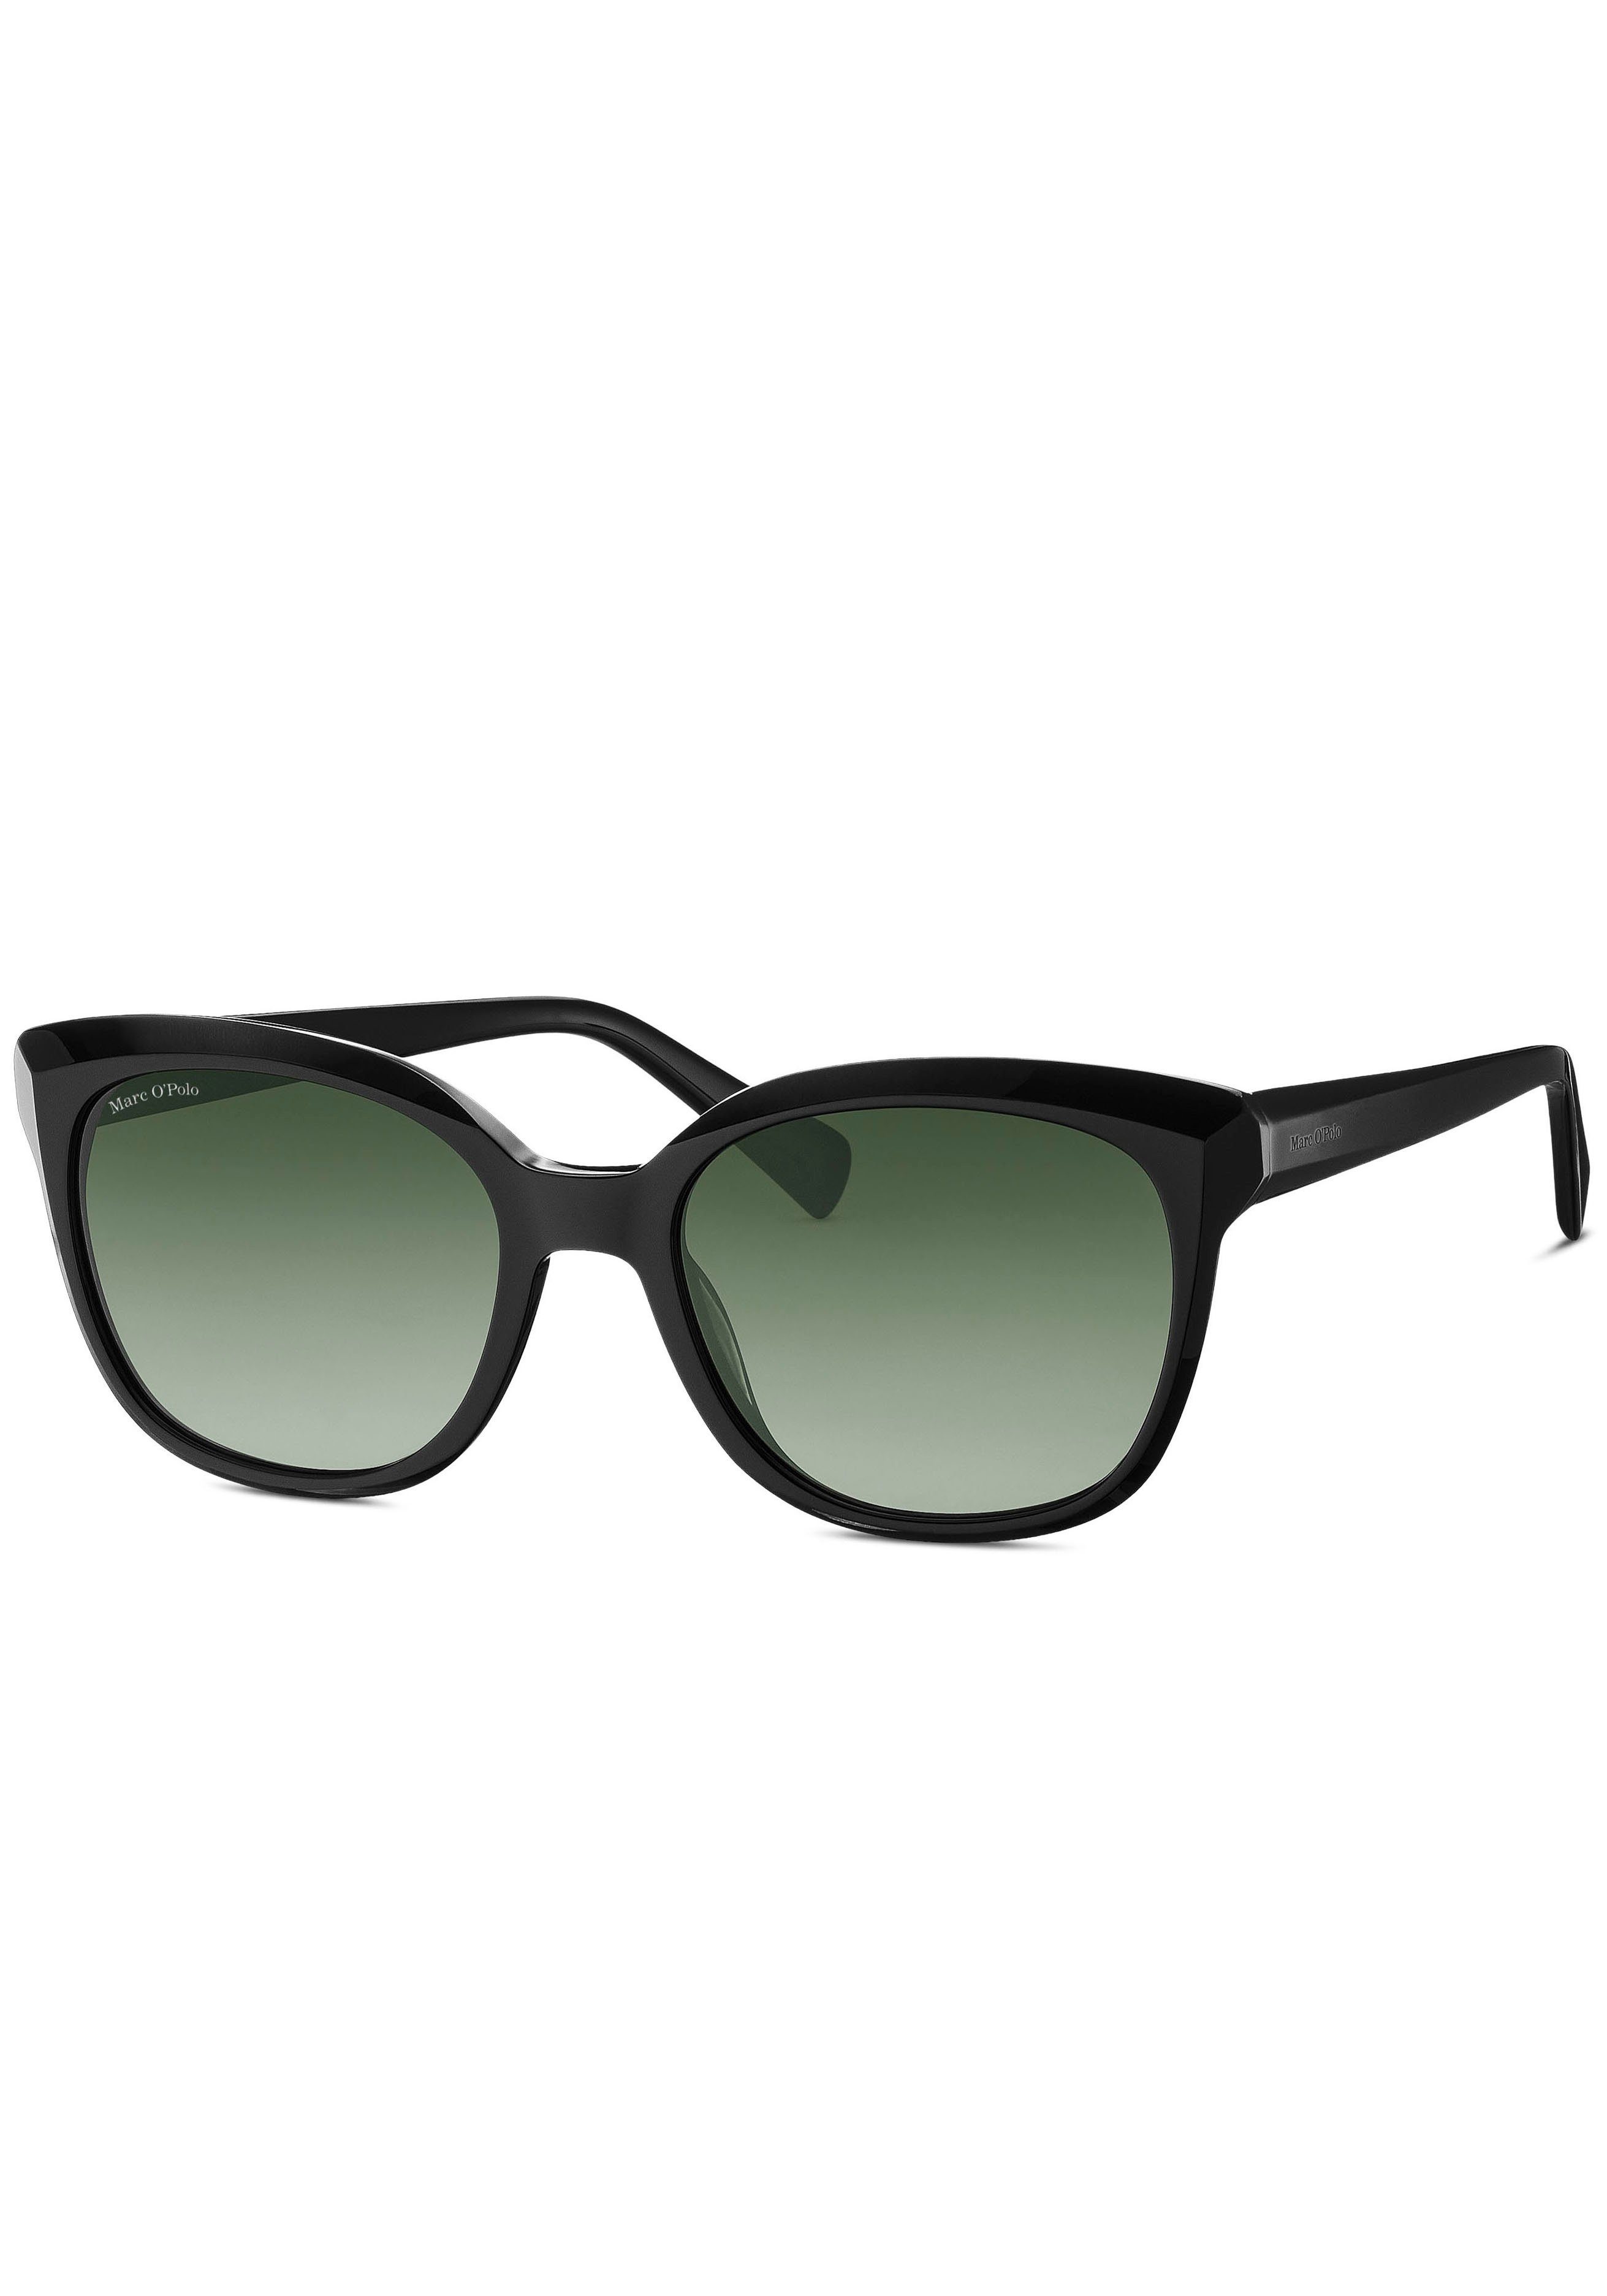 Marc O'Polo Sonnenbrille Modell 506196 Karree-Form schwarz